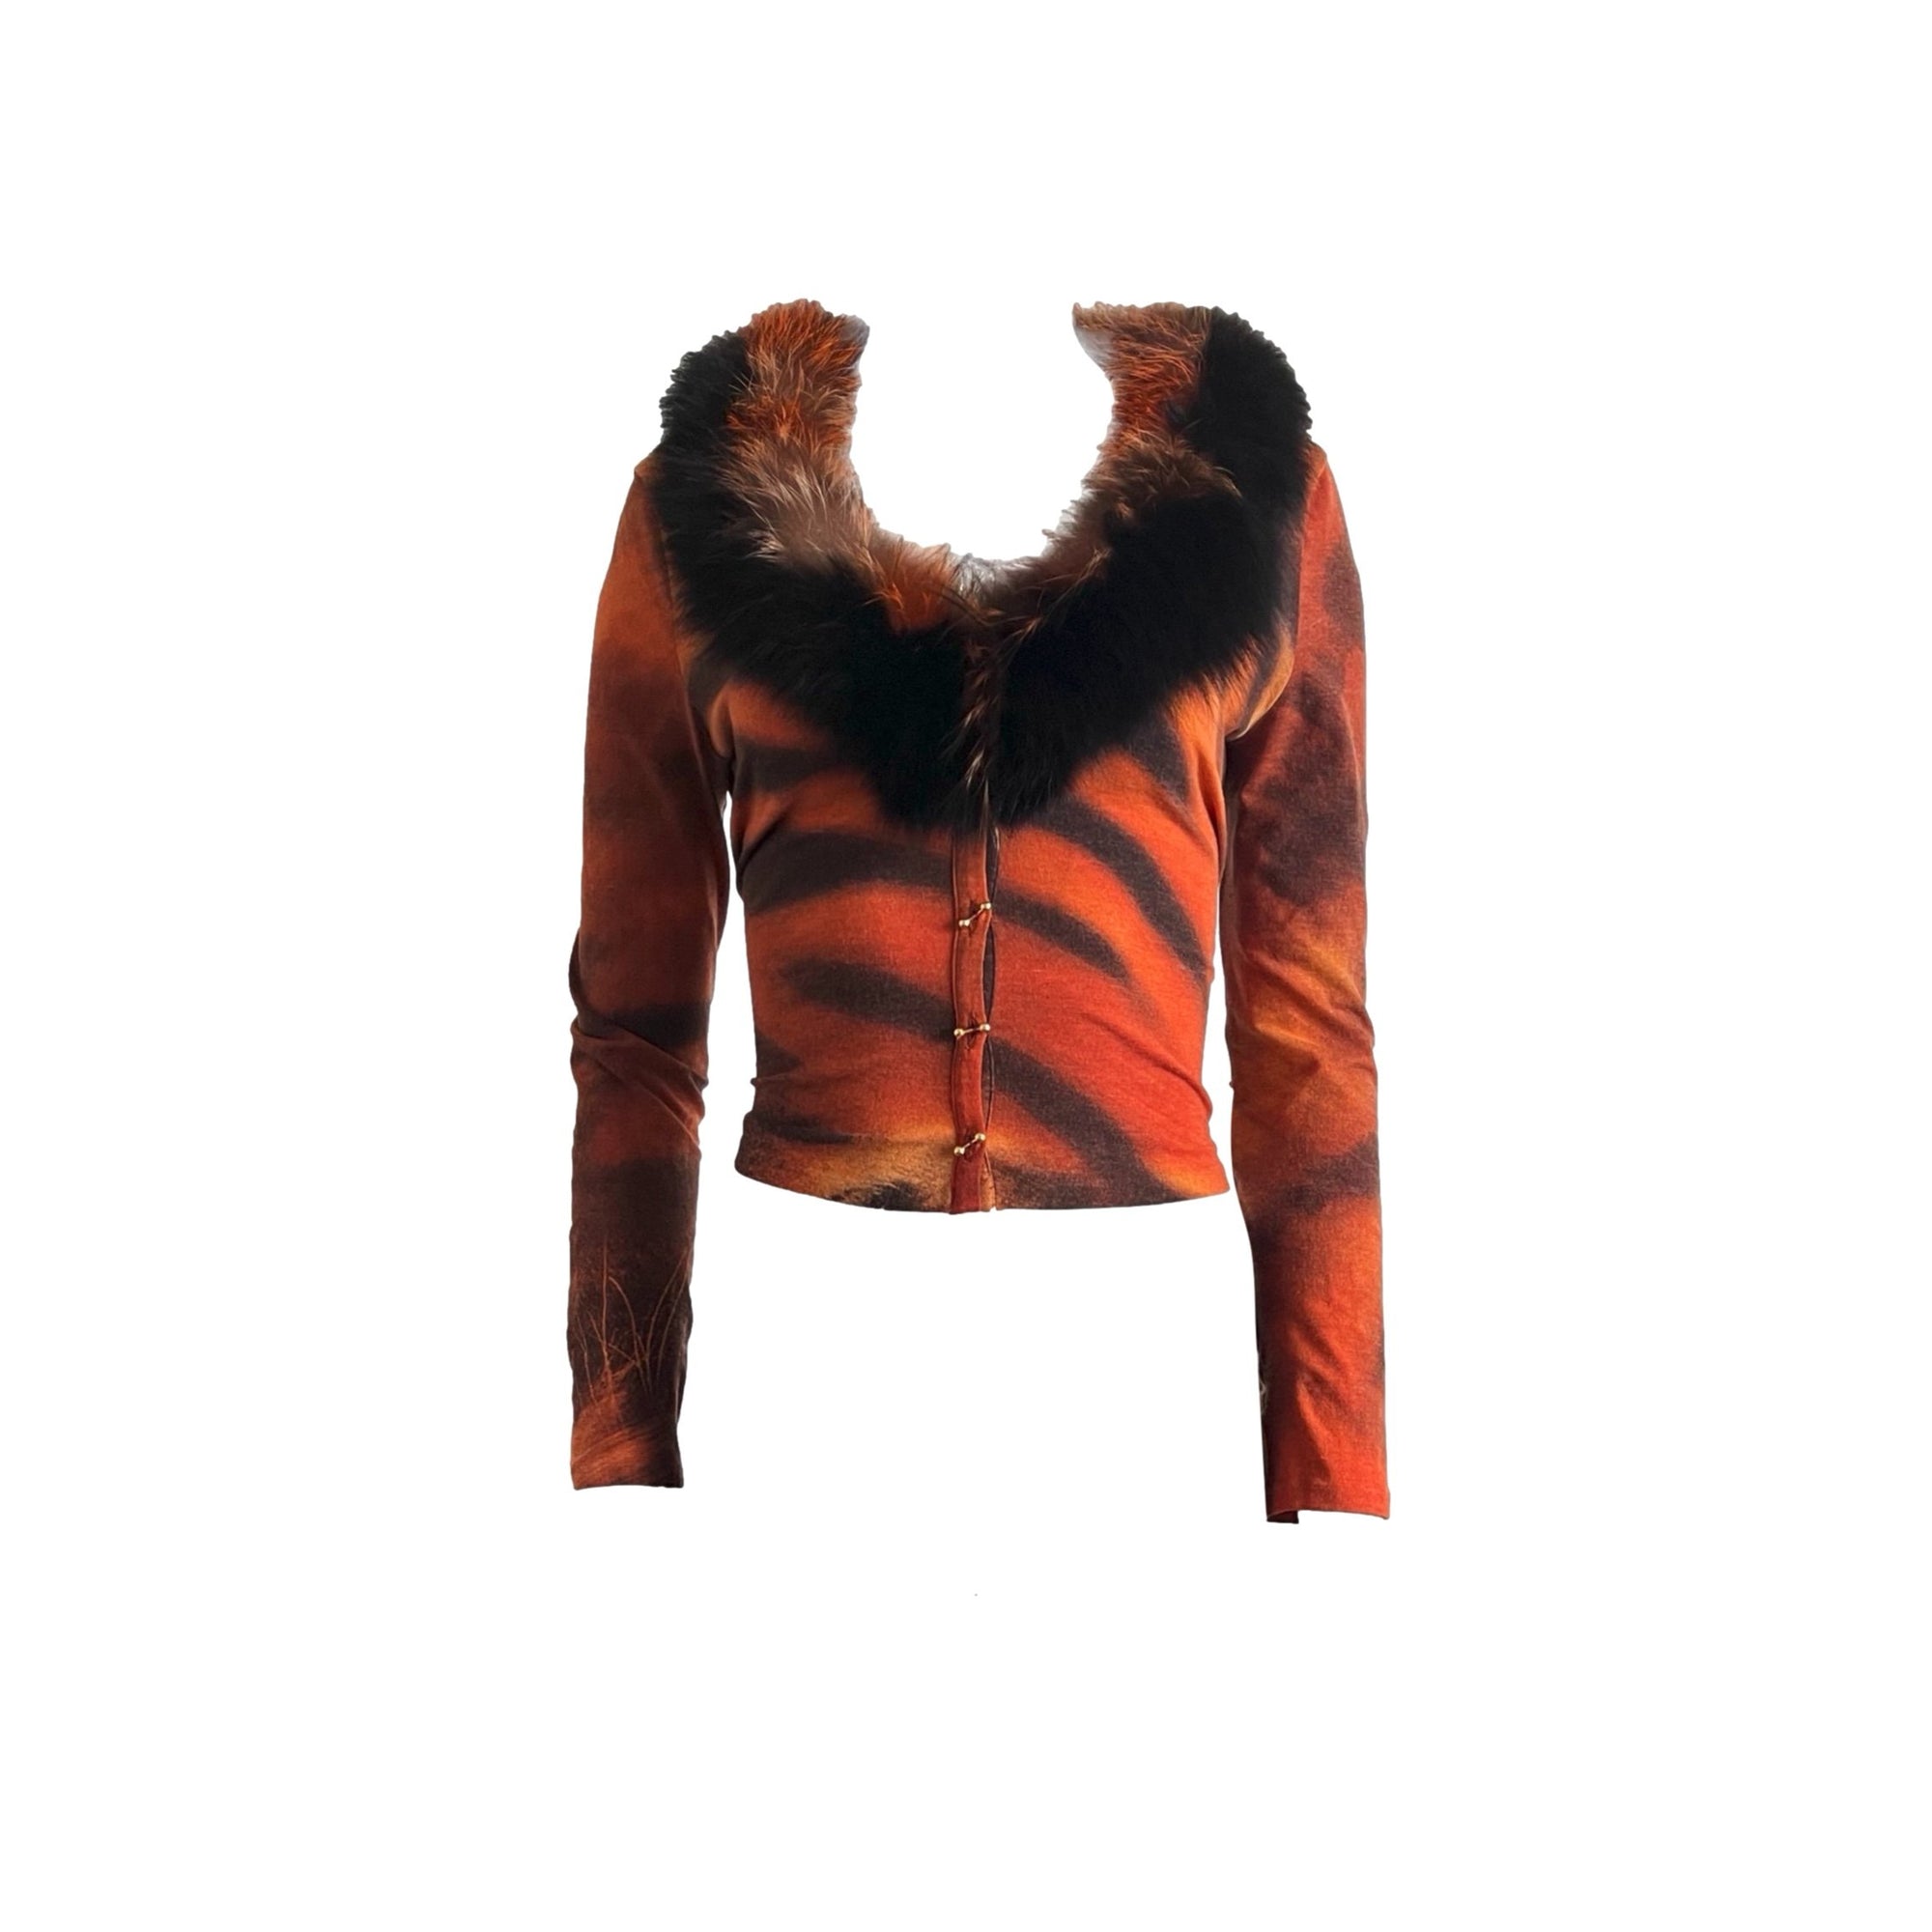 Roberto Cavalli Tiger Print Fur Top - Apparel